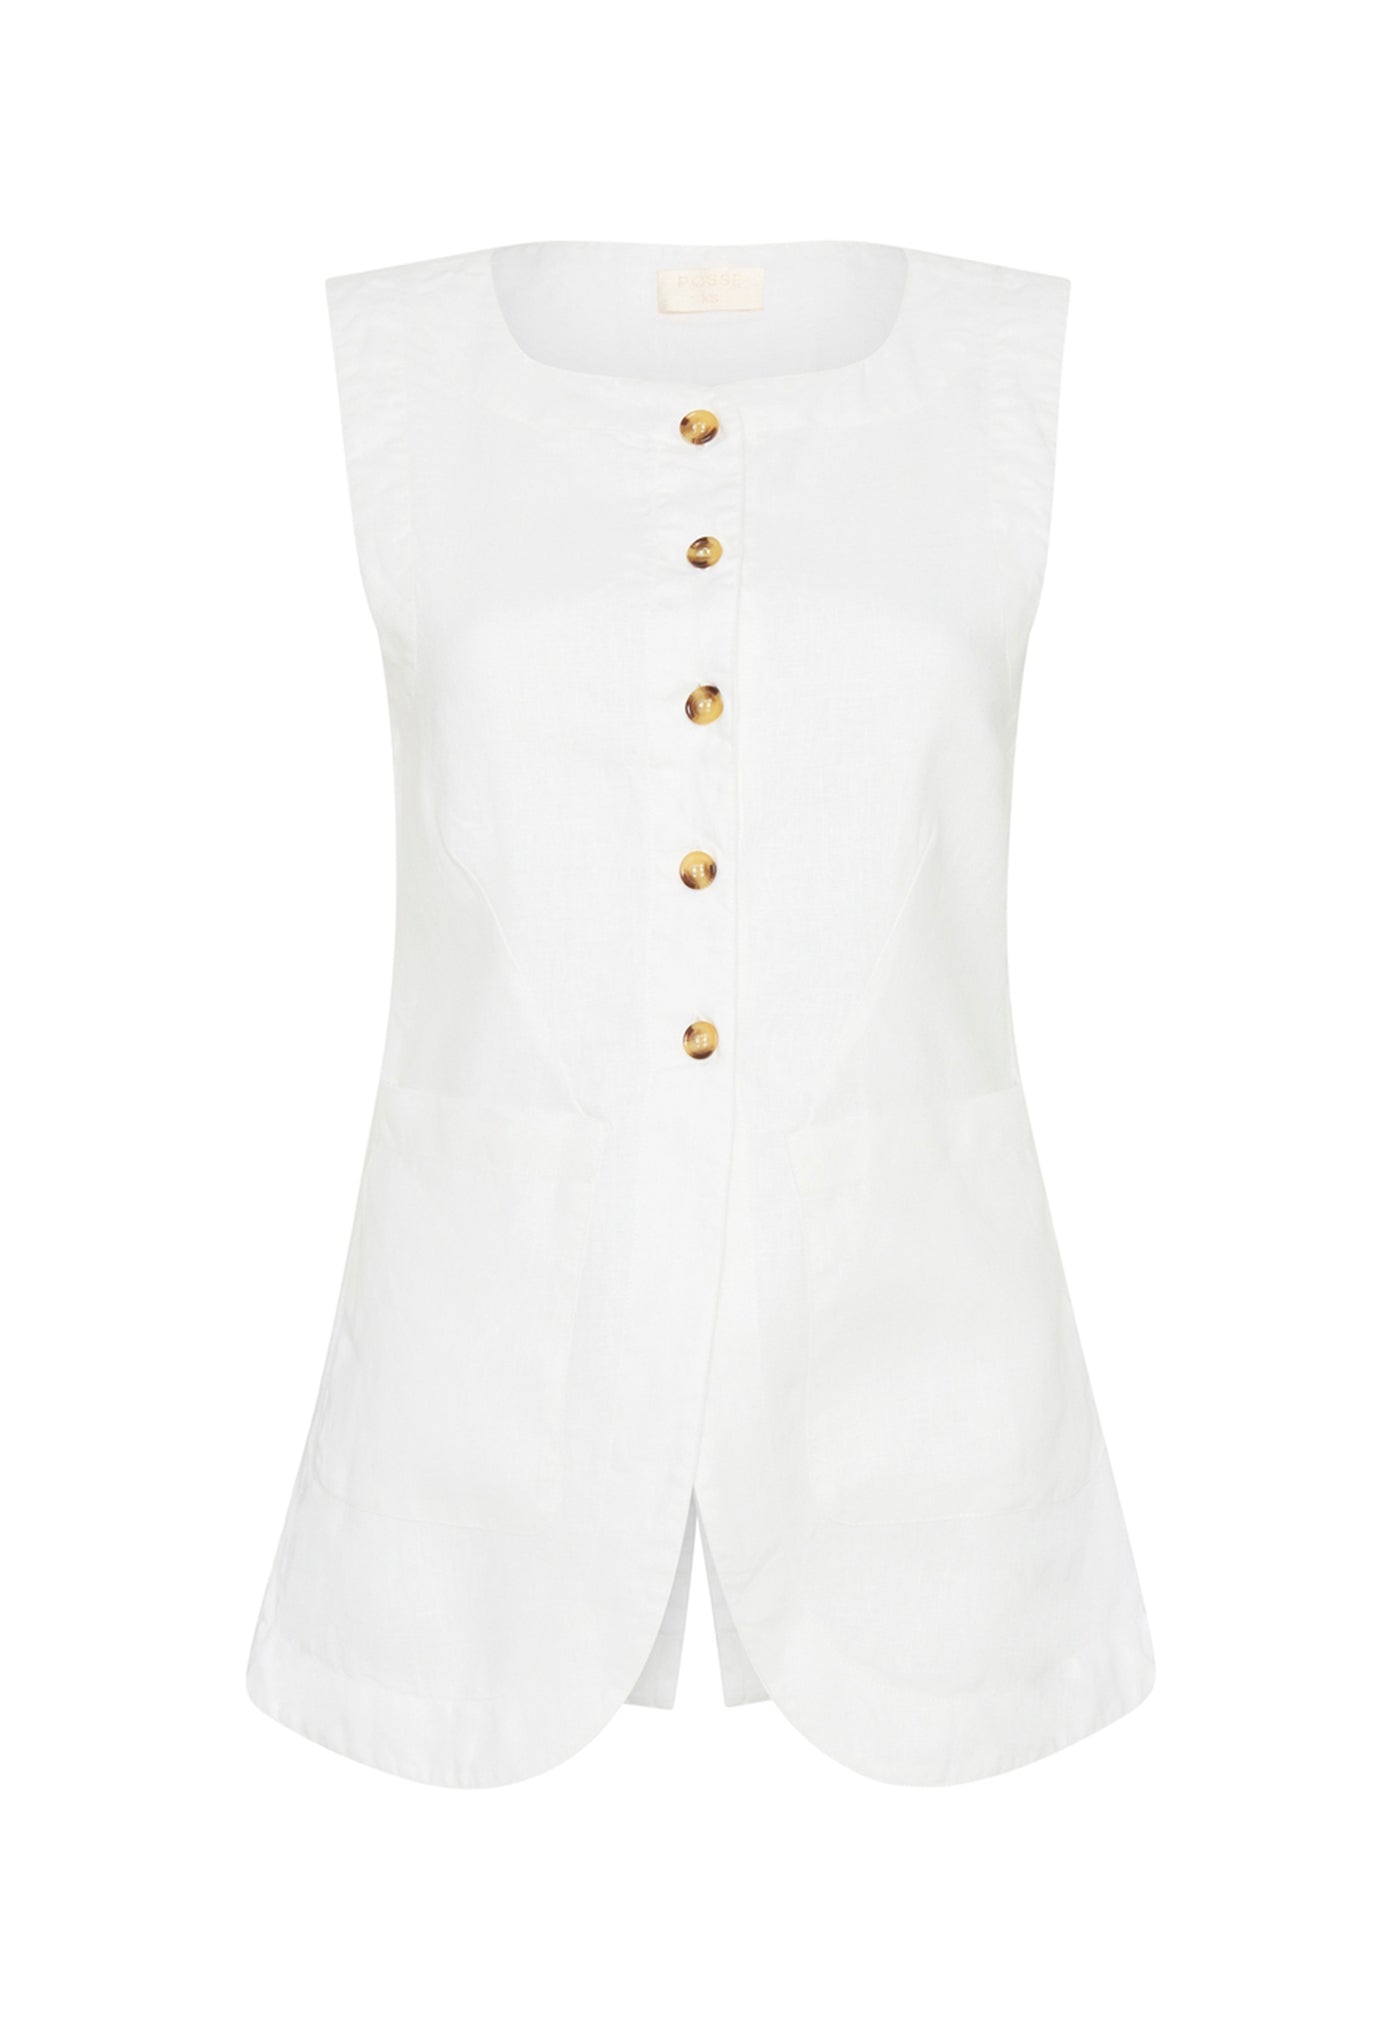 Emma Vest - Ivory sold by Angel Divine